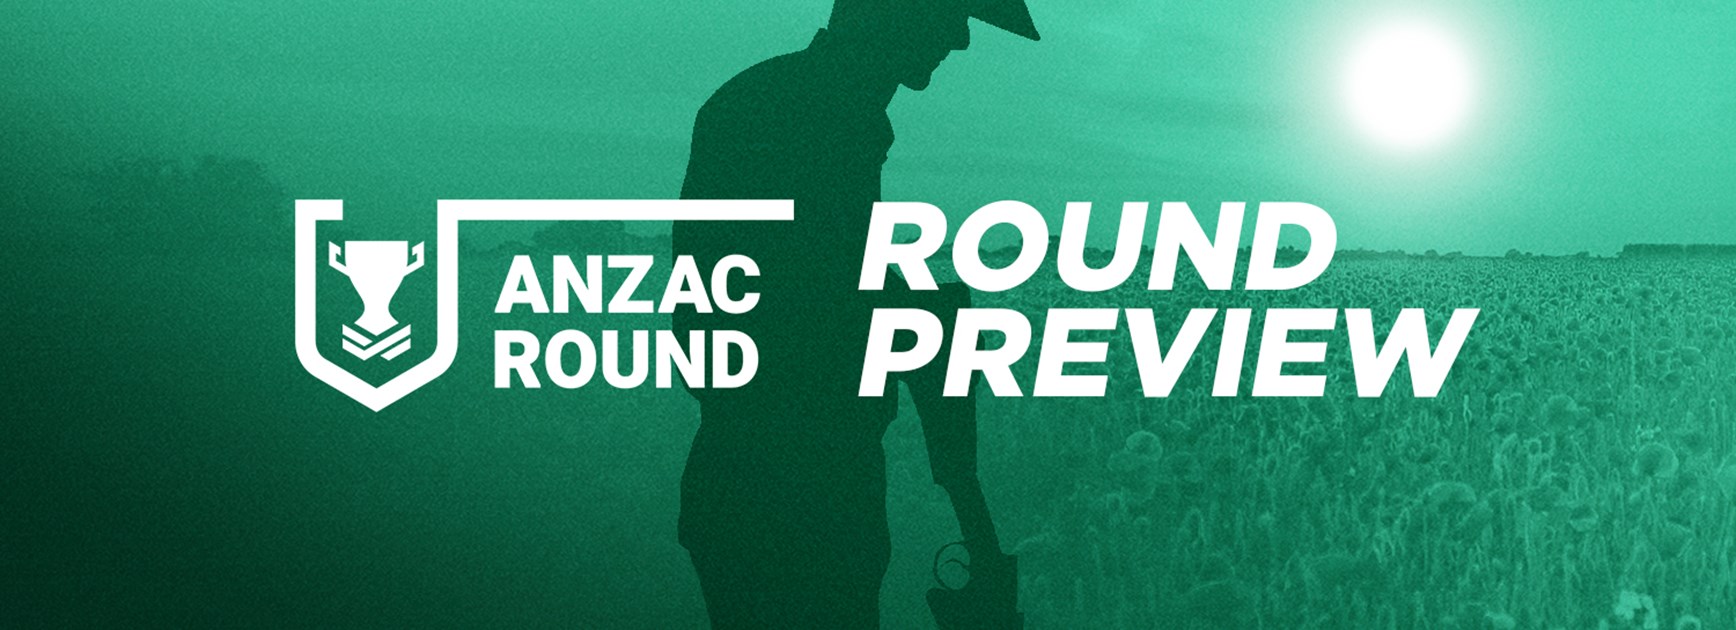 BMD Premiership Round 6 preview: ANZAC Round